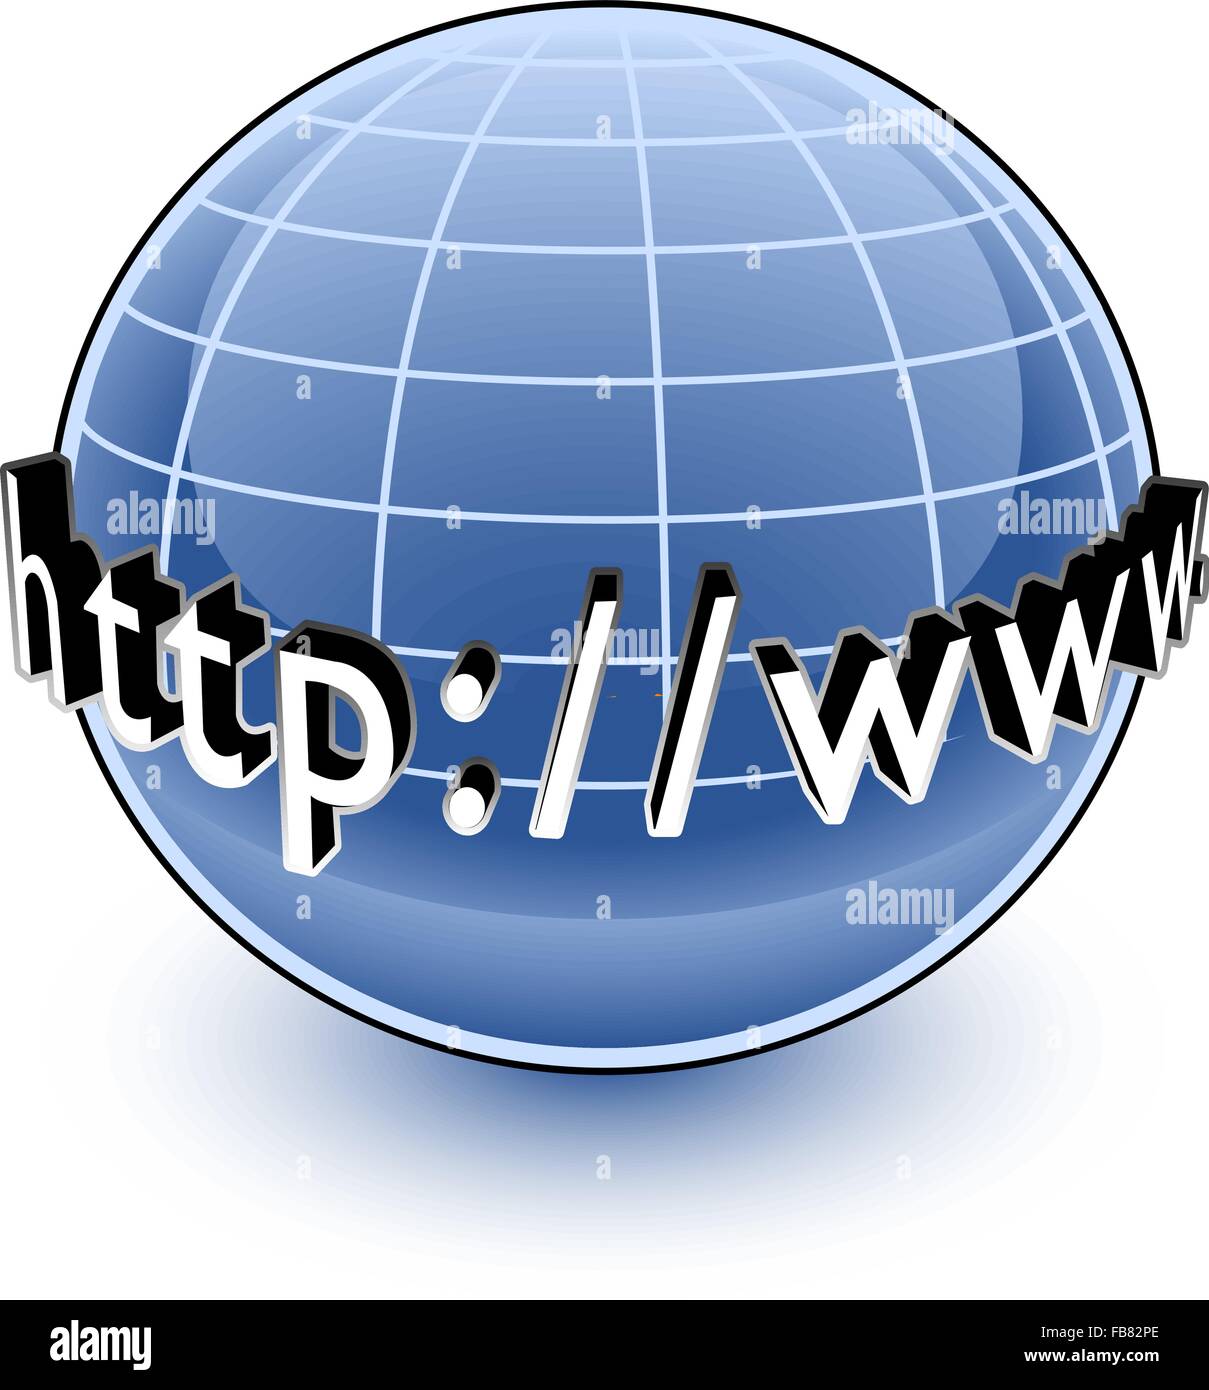 world wide web globe png